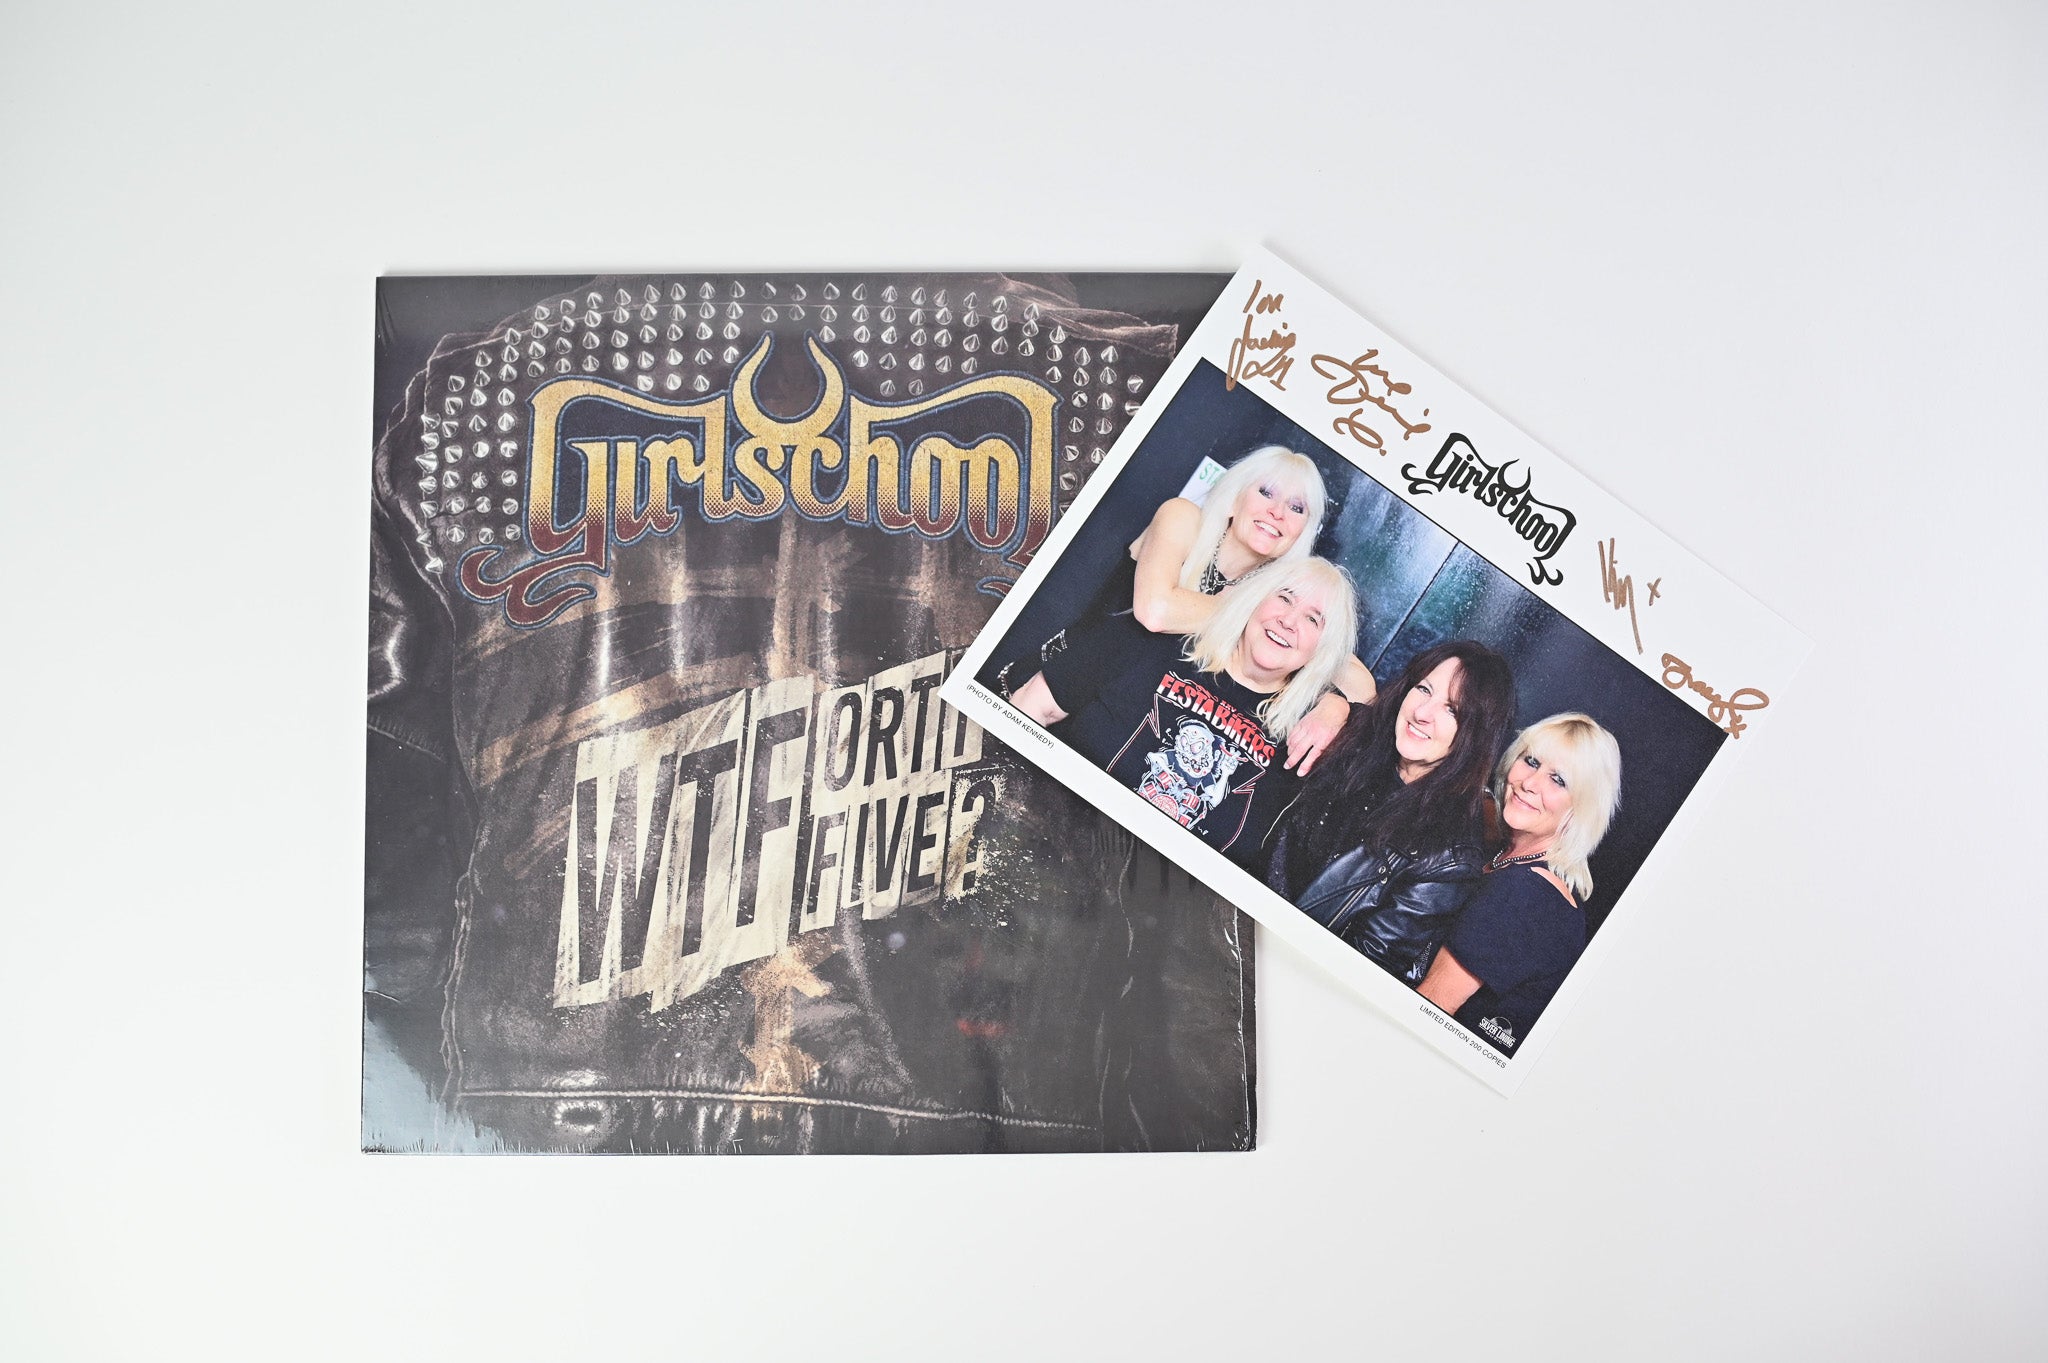 Girlschool - WTFortyFive? on Silver Lining Music Yellow Vinyl w/ Autographed Insert